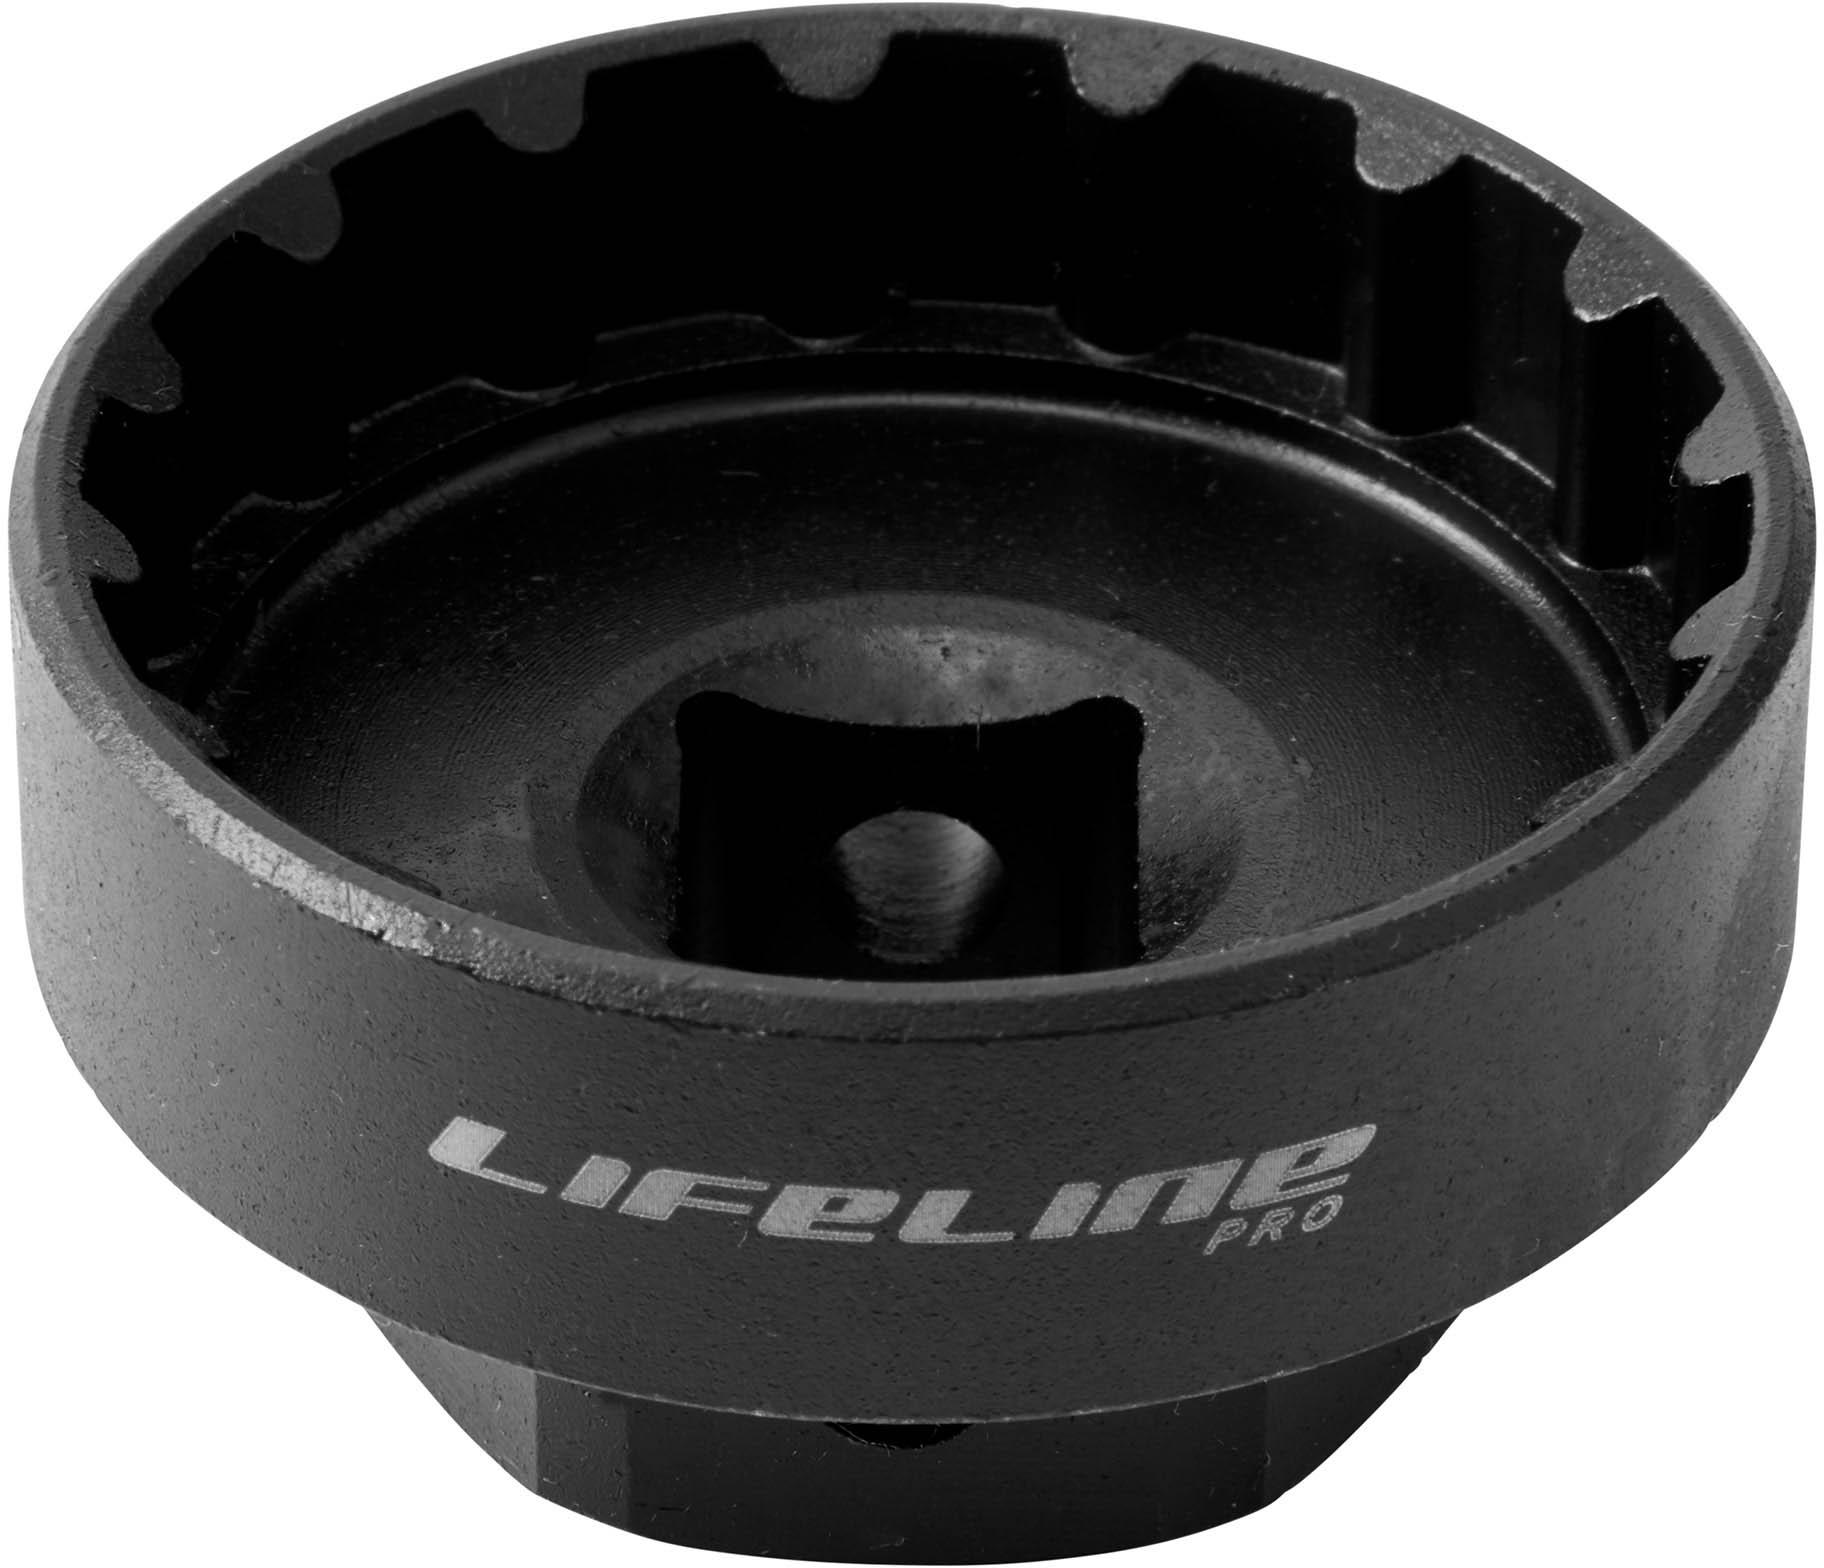 Lifeline Pro Shimano Bb Tool - Black